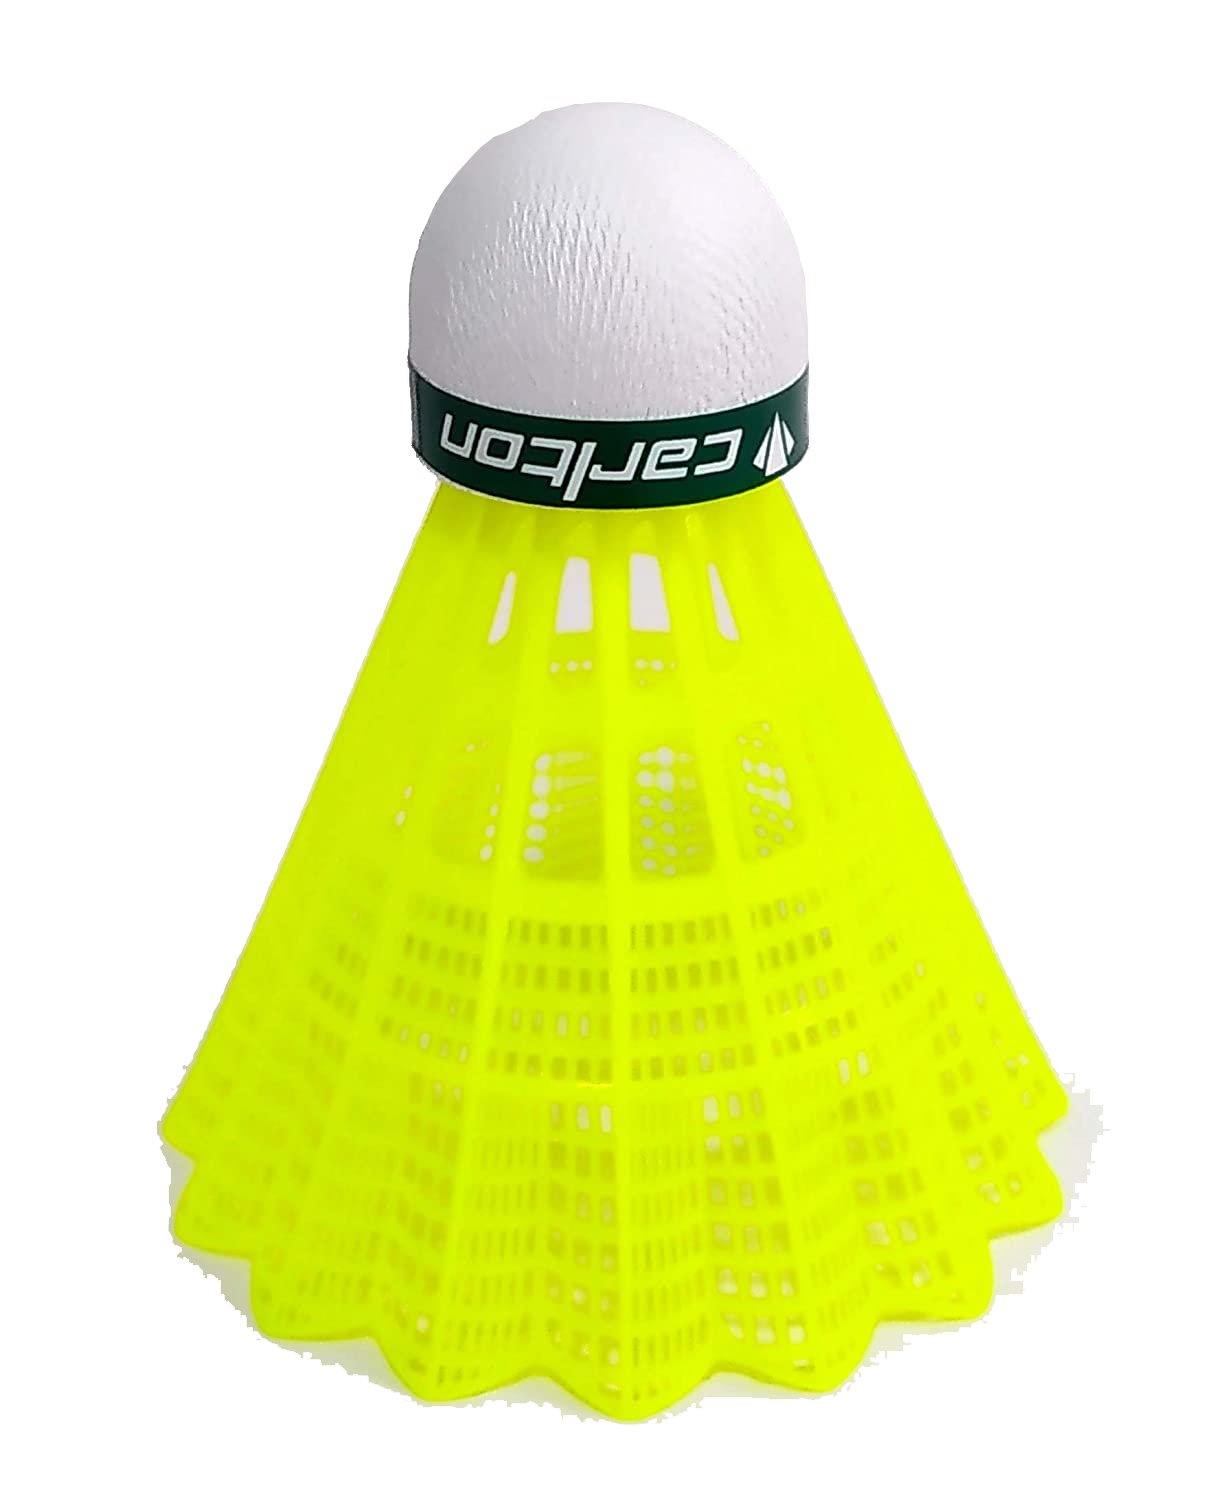 Carlton TE900 Yellow Badminton Shuttlecock (Green Cap) - Best Price online Prokicksports.com